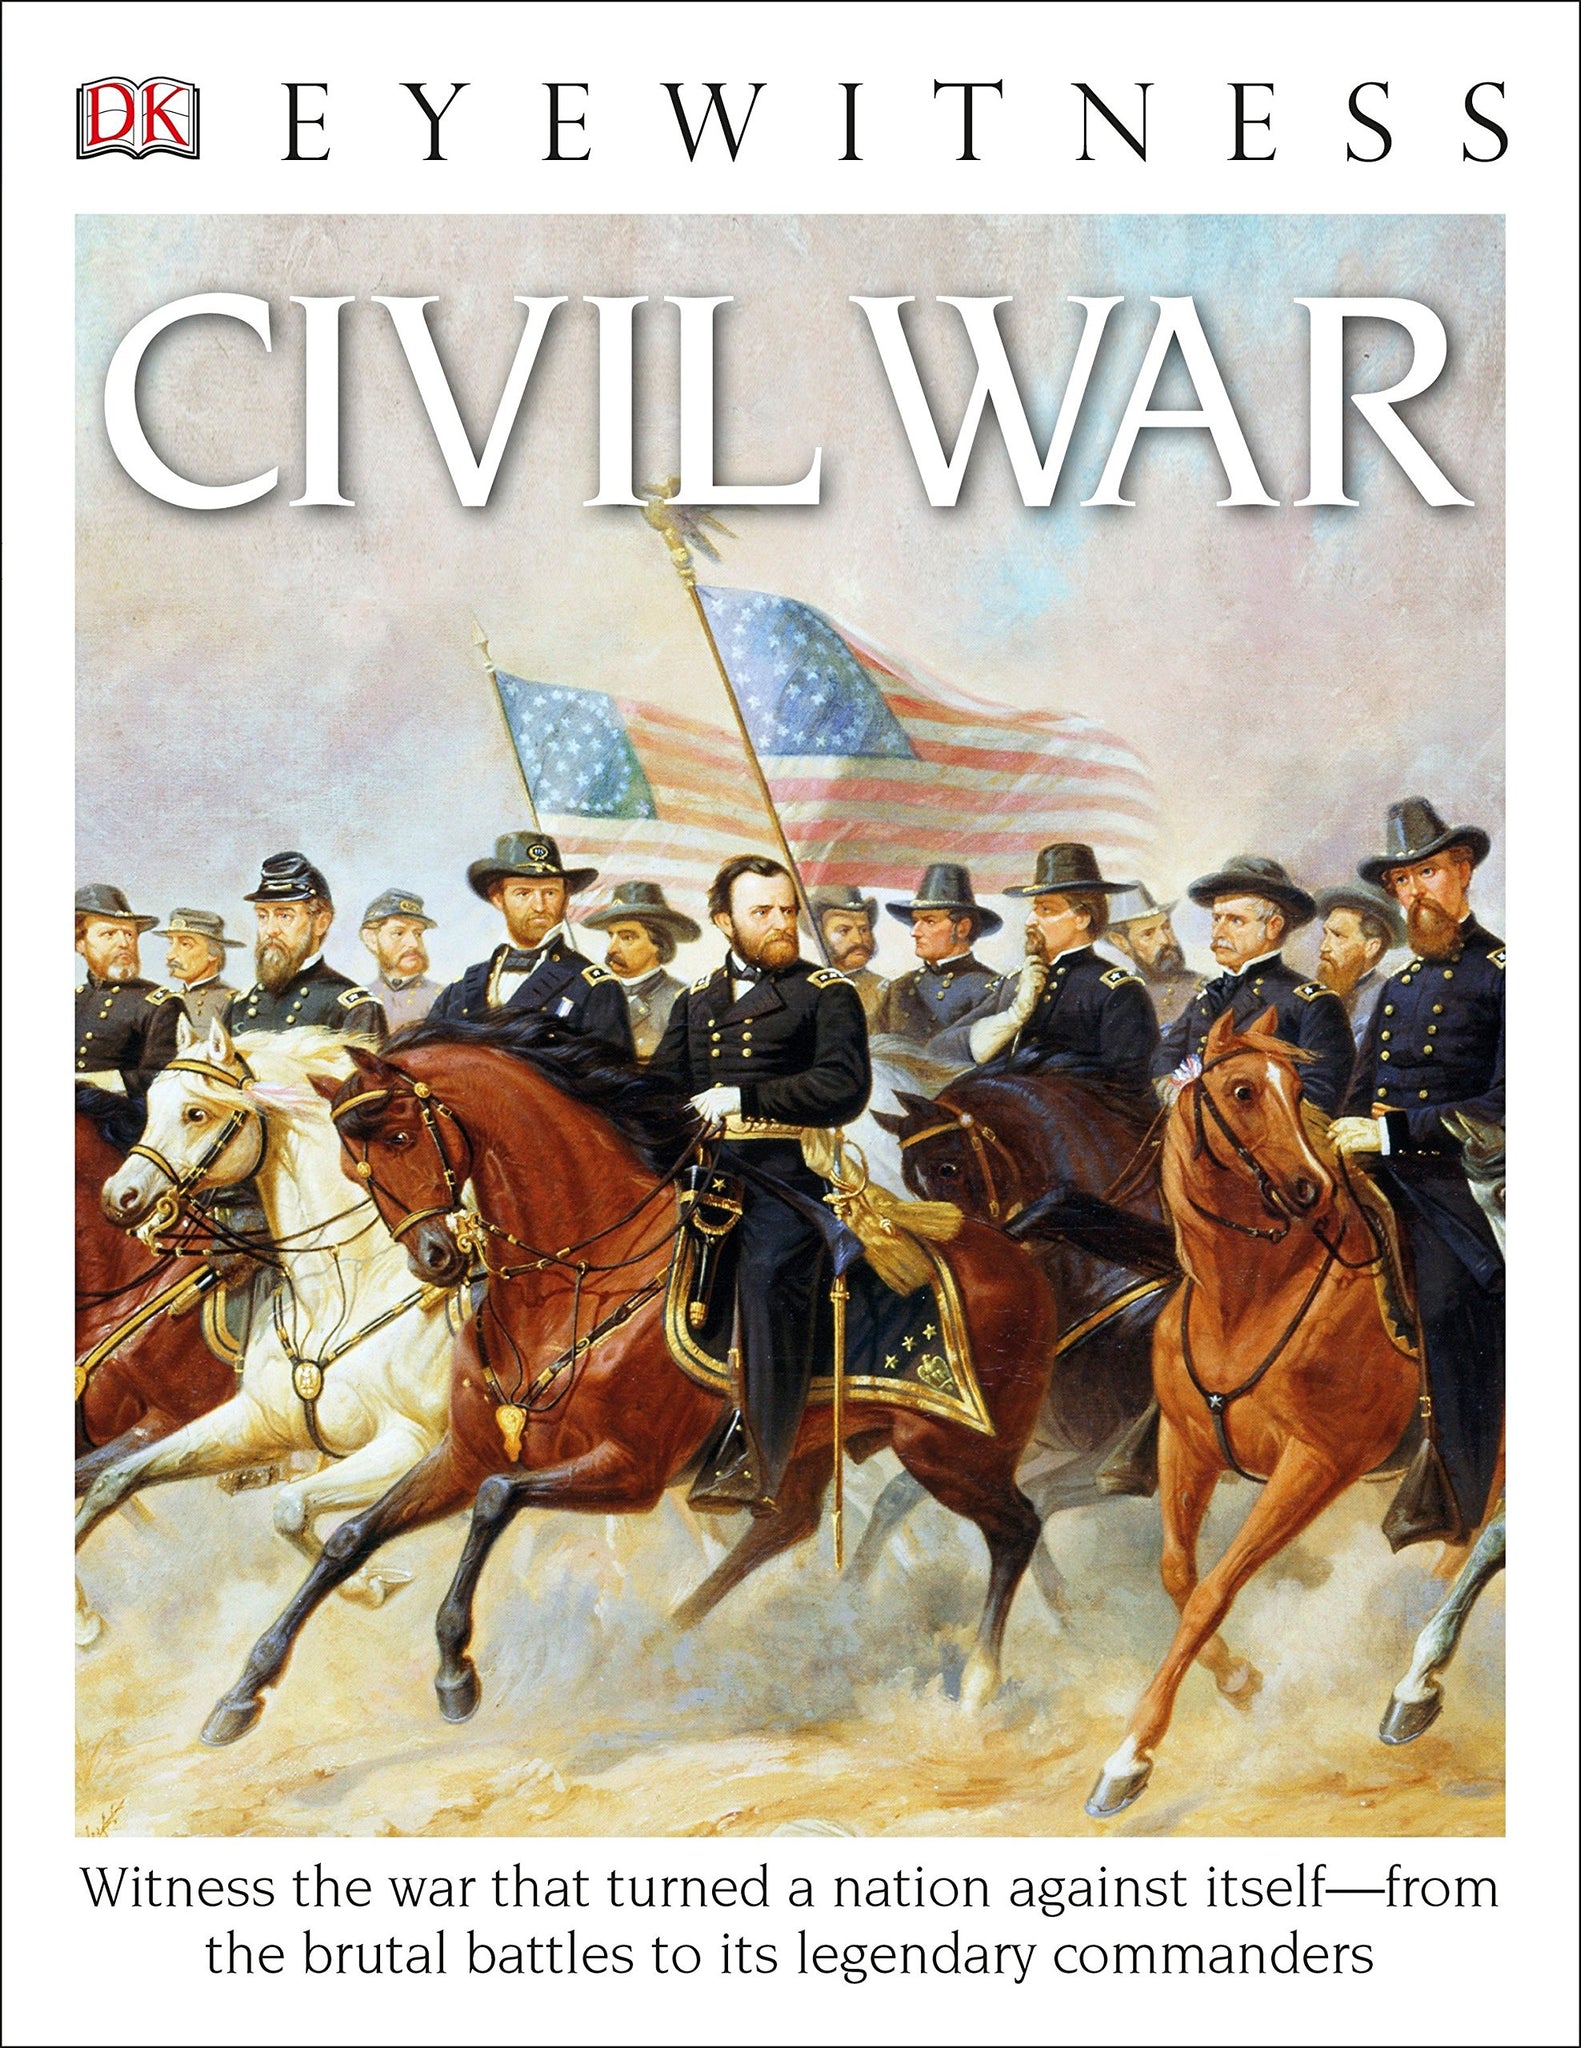 DK Eyewitness: Civil War